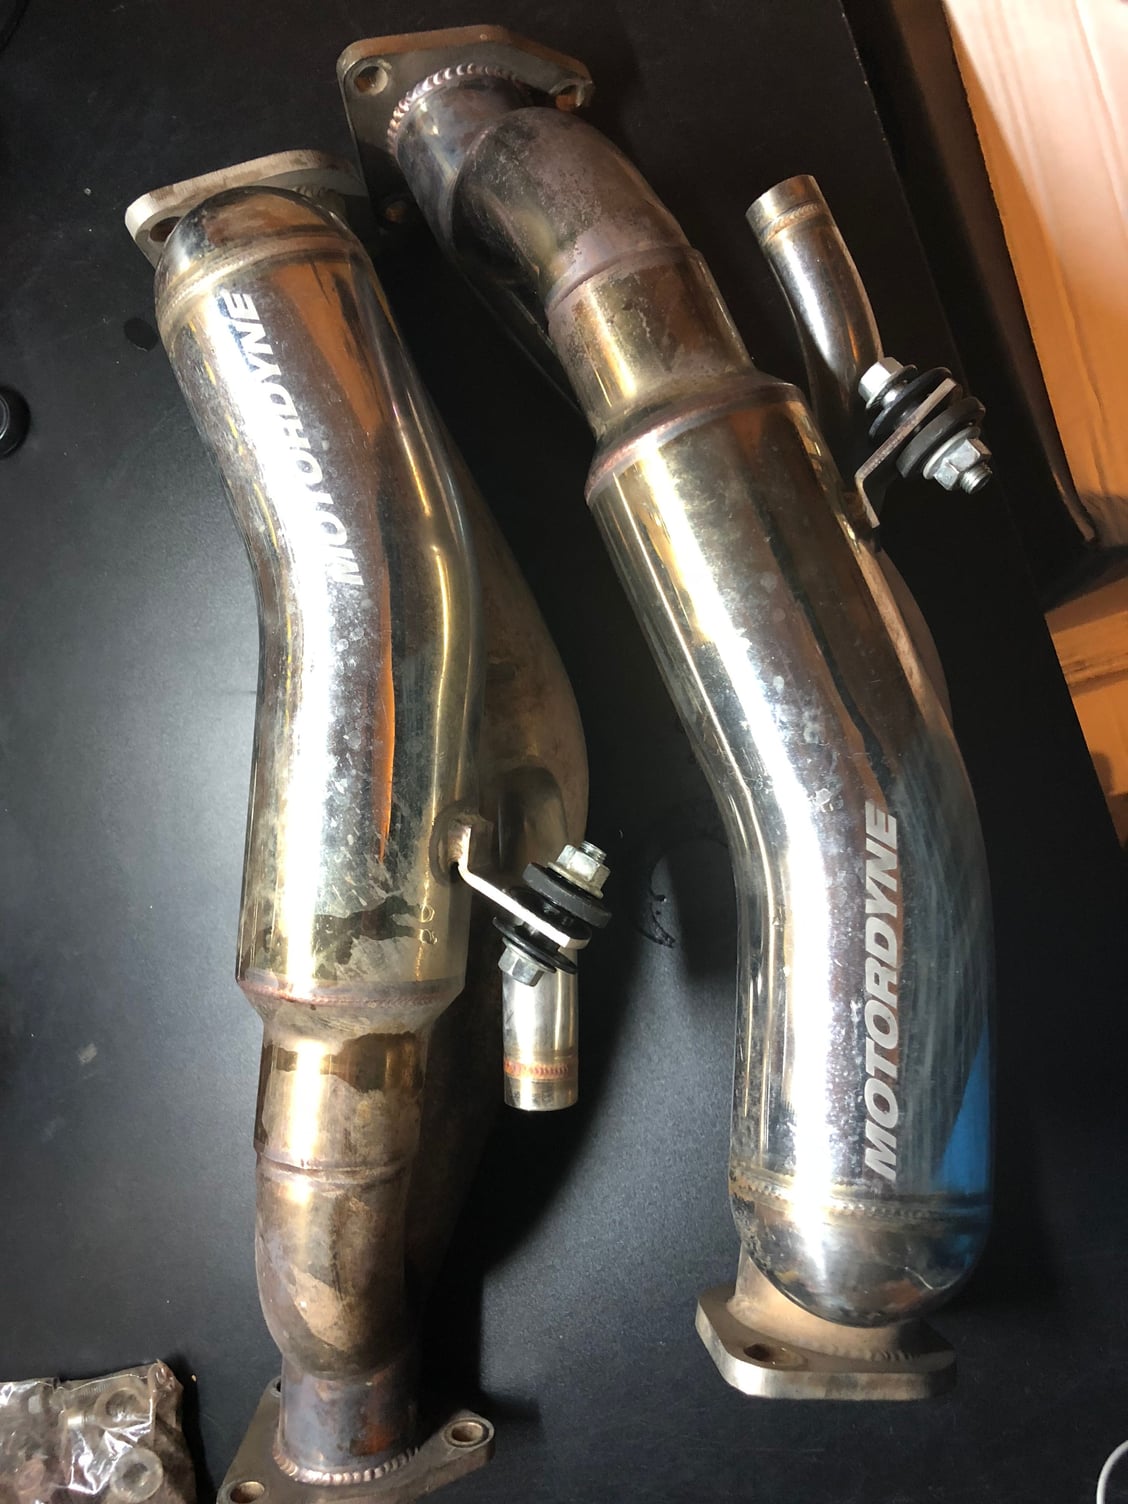 [FS]: Motordyne ART Pipes V3 - MY350Z.COM - Nissan 350Z and 370Z Forum